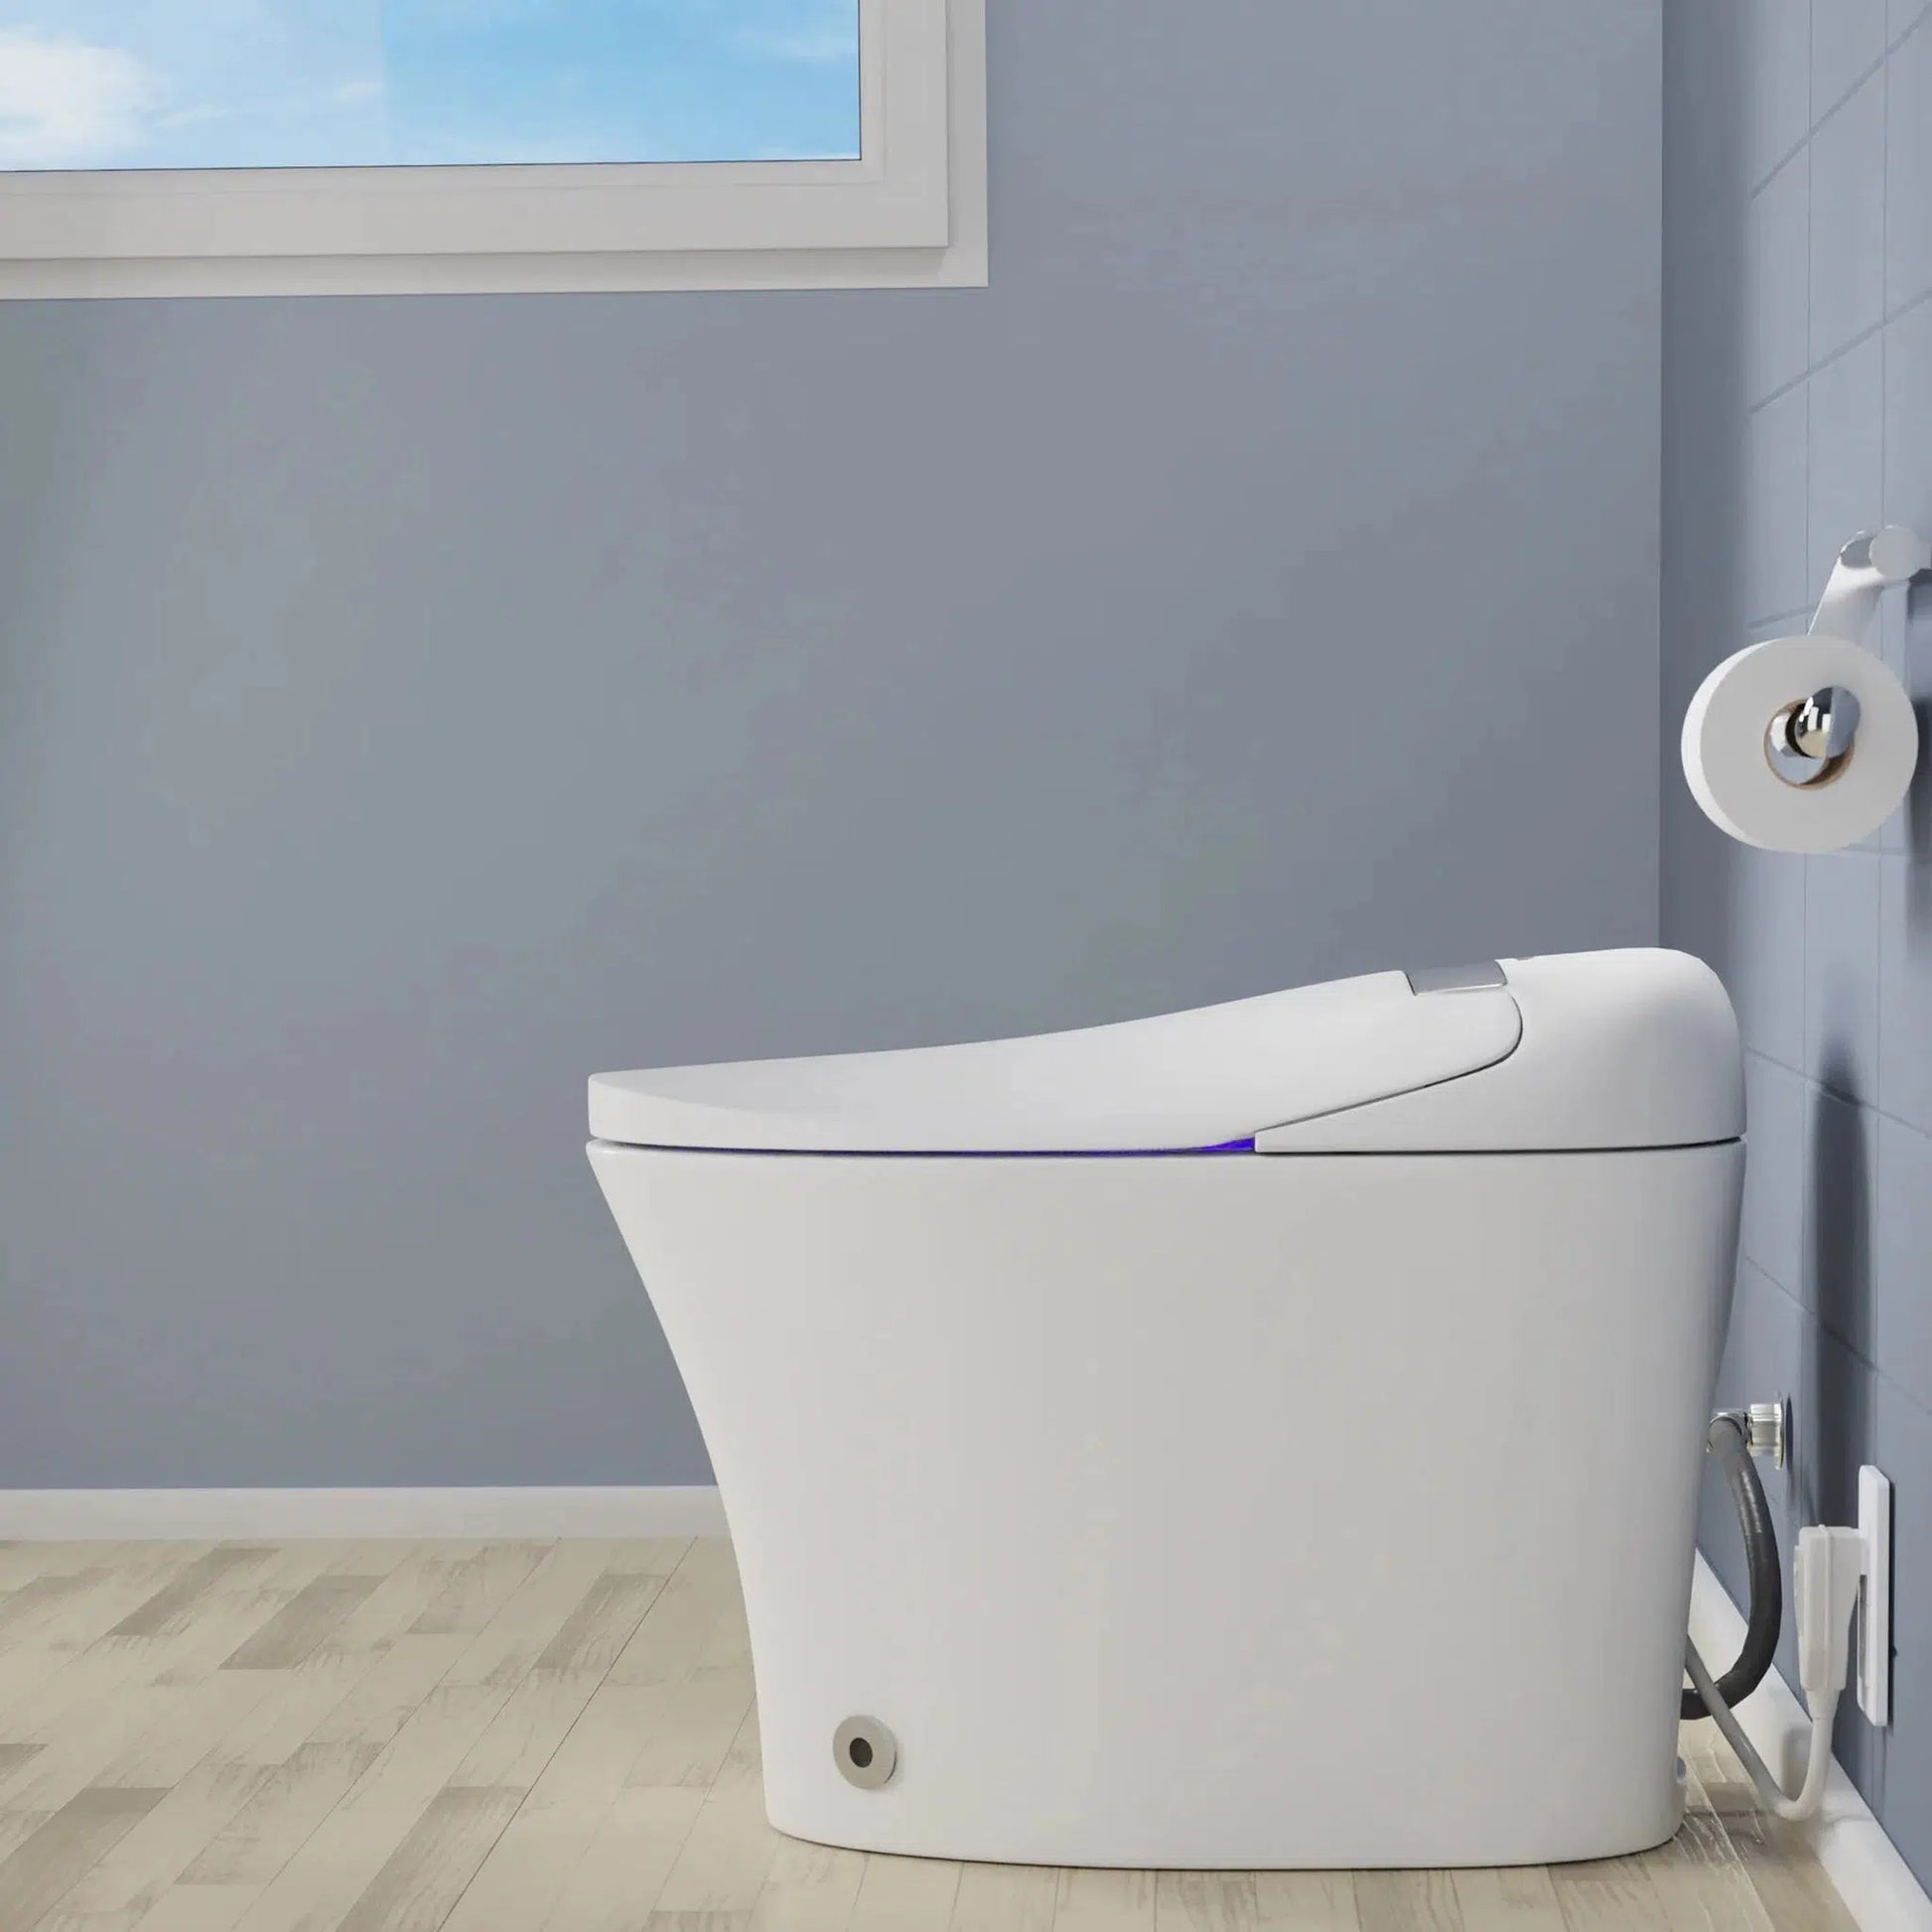 Trone Aquatina II White Elongated Electronic Luxury Toilet With Integrated Bidet